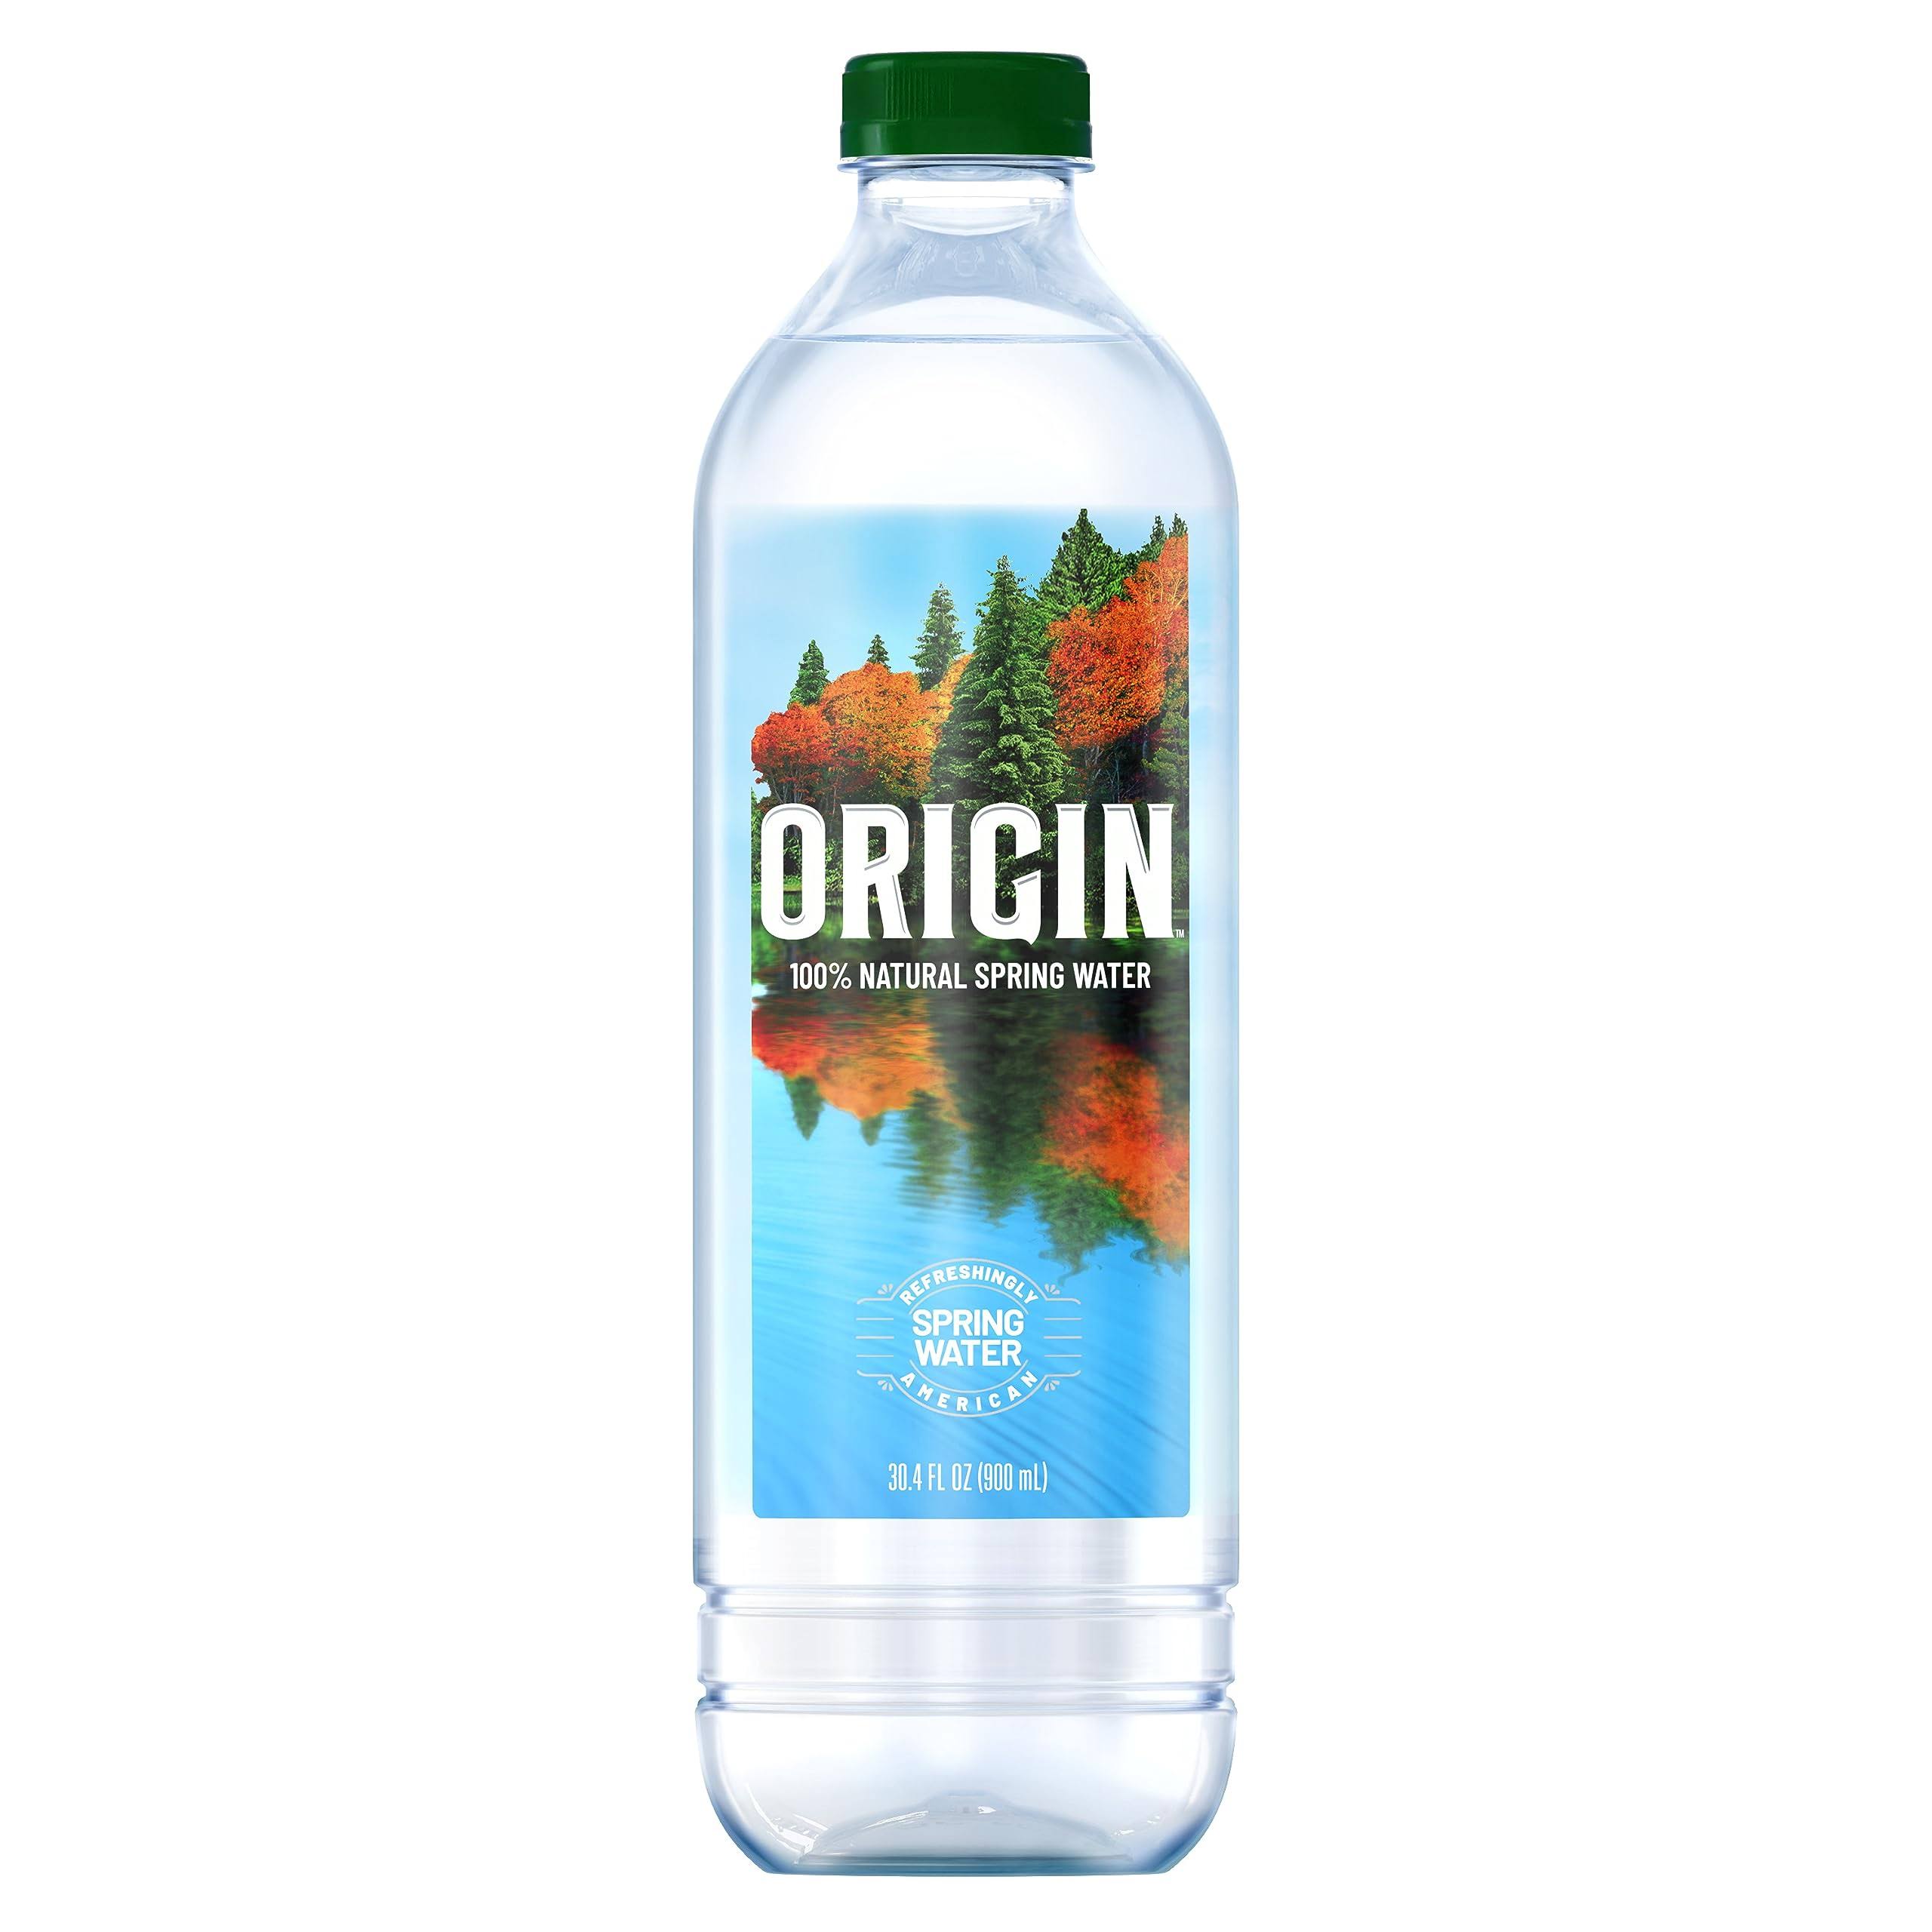 Origin Spring Water, 100% Natural - 30.4 fl oz